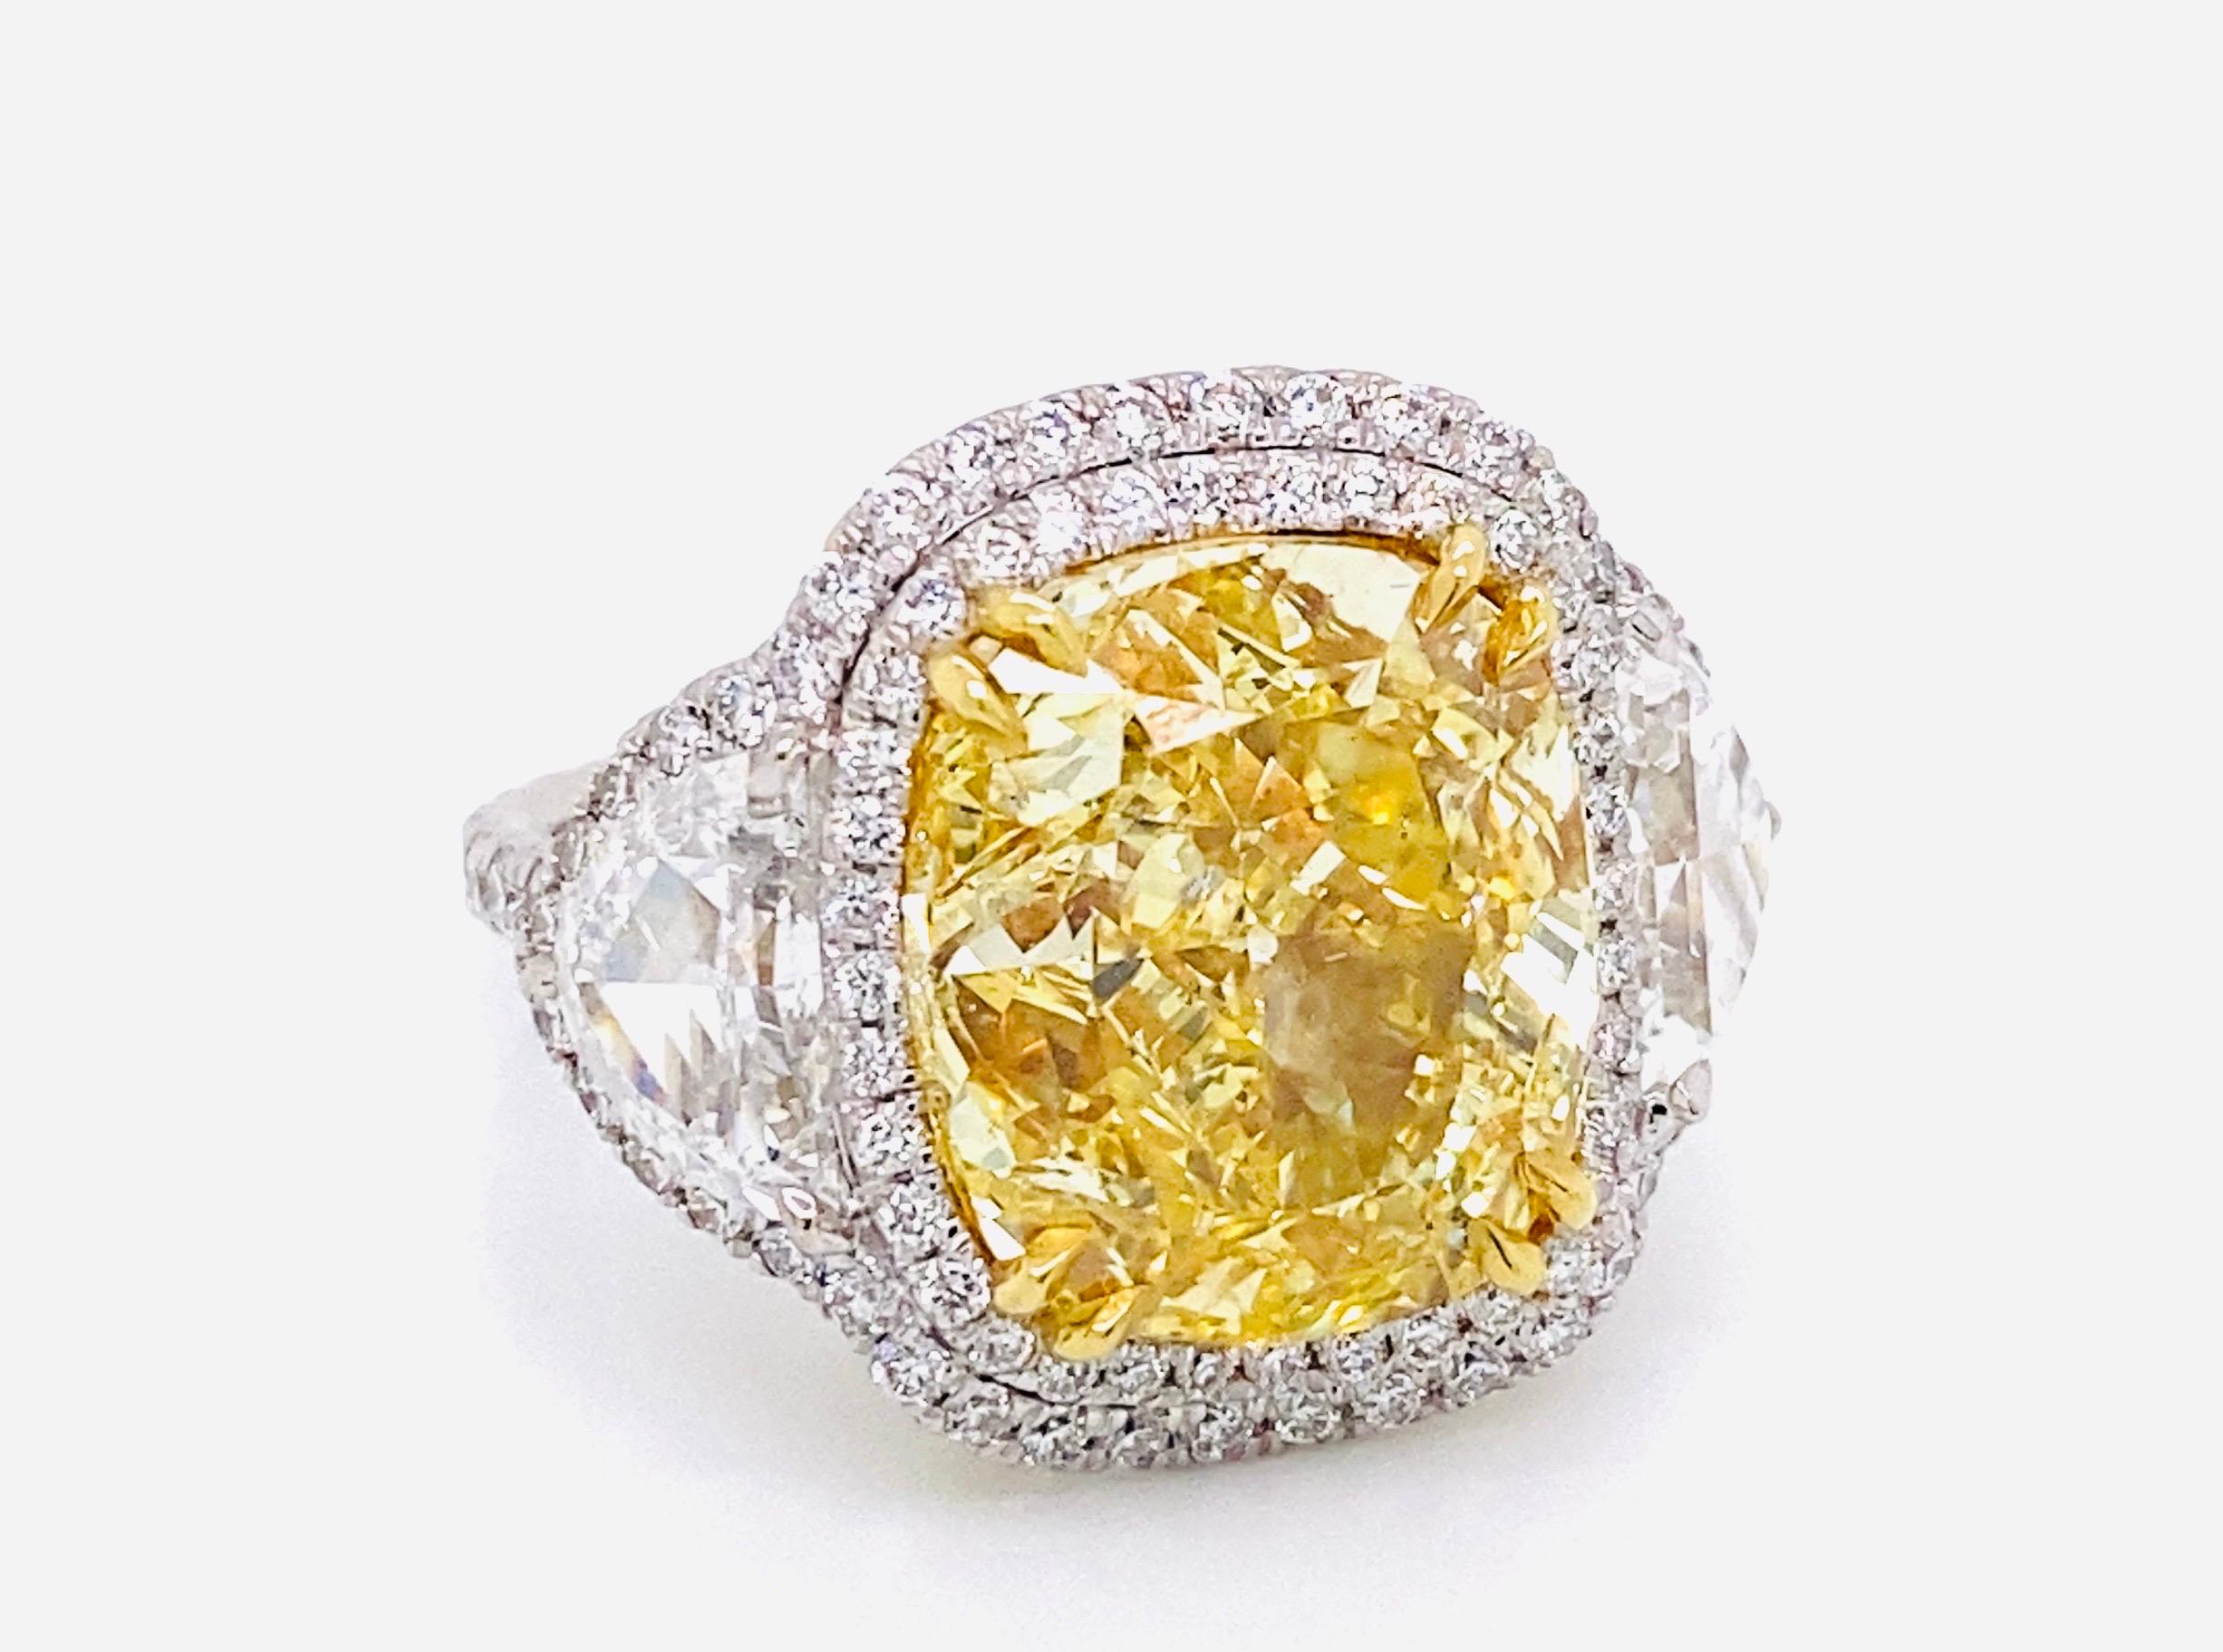 Emilio Jewelry GIA Certified 12.67 Carat Fancy Intense Yellow Diamond Ring For Sale 3